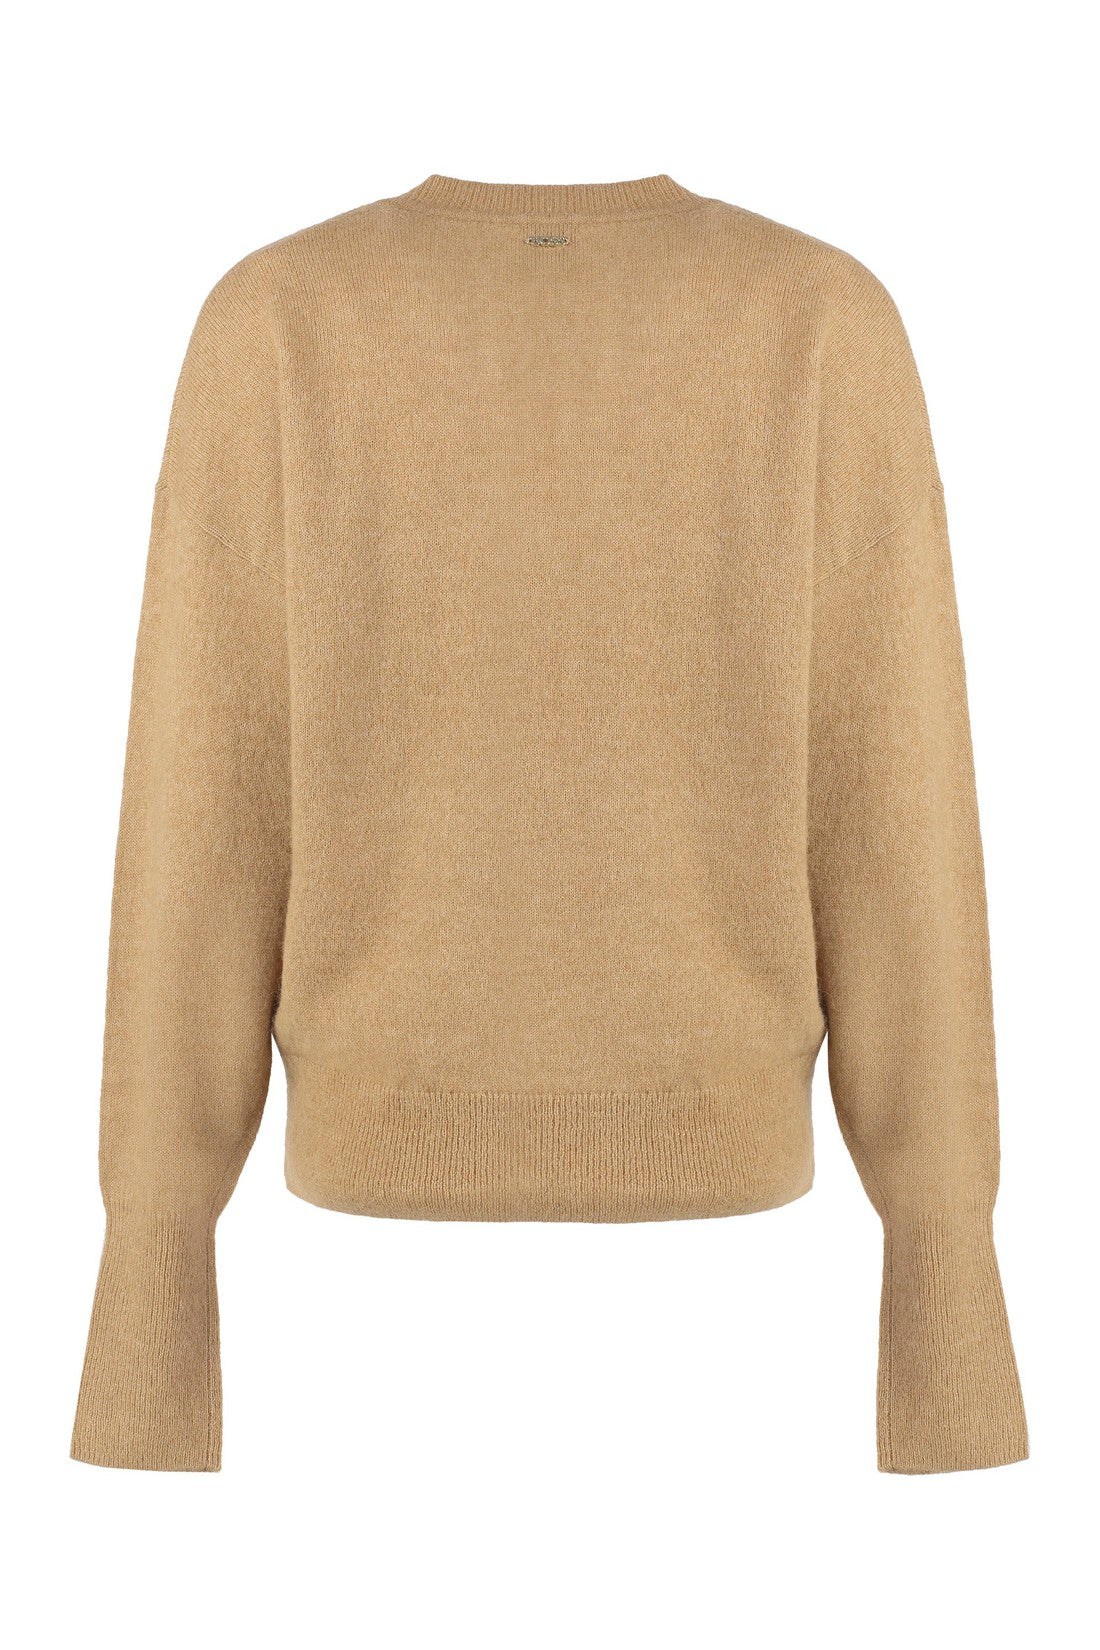 BOSS-OUTLET-SALE-Alpaca blend sweater-ARCHIVIST